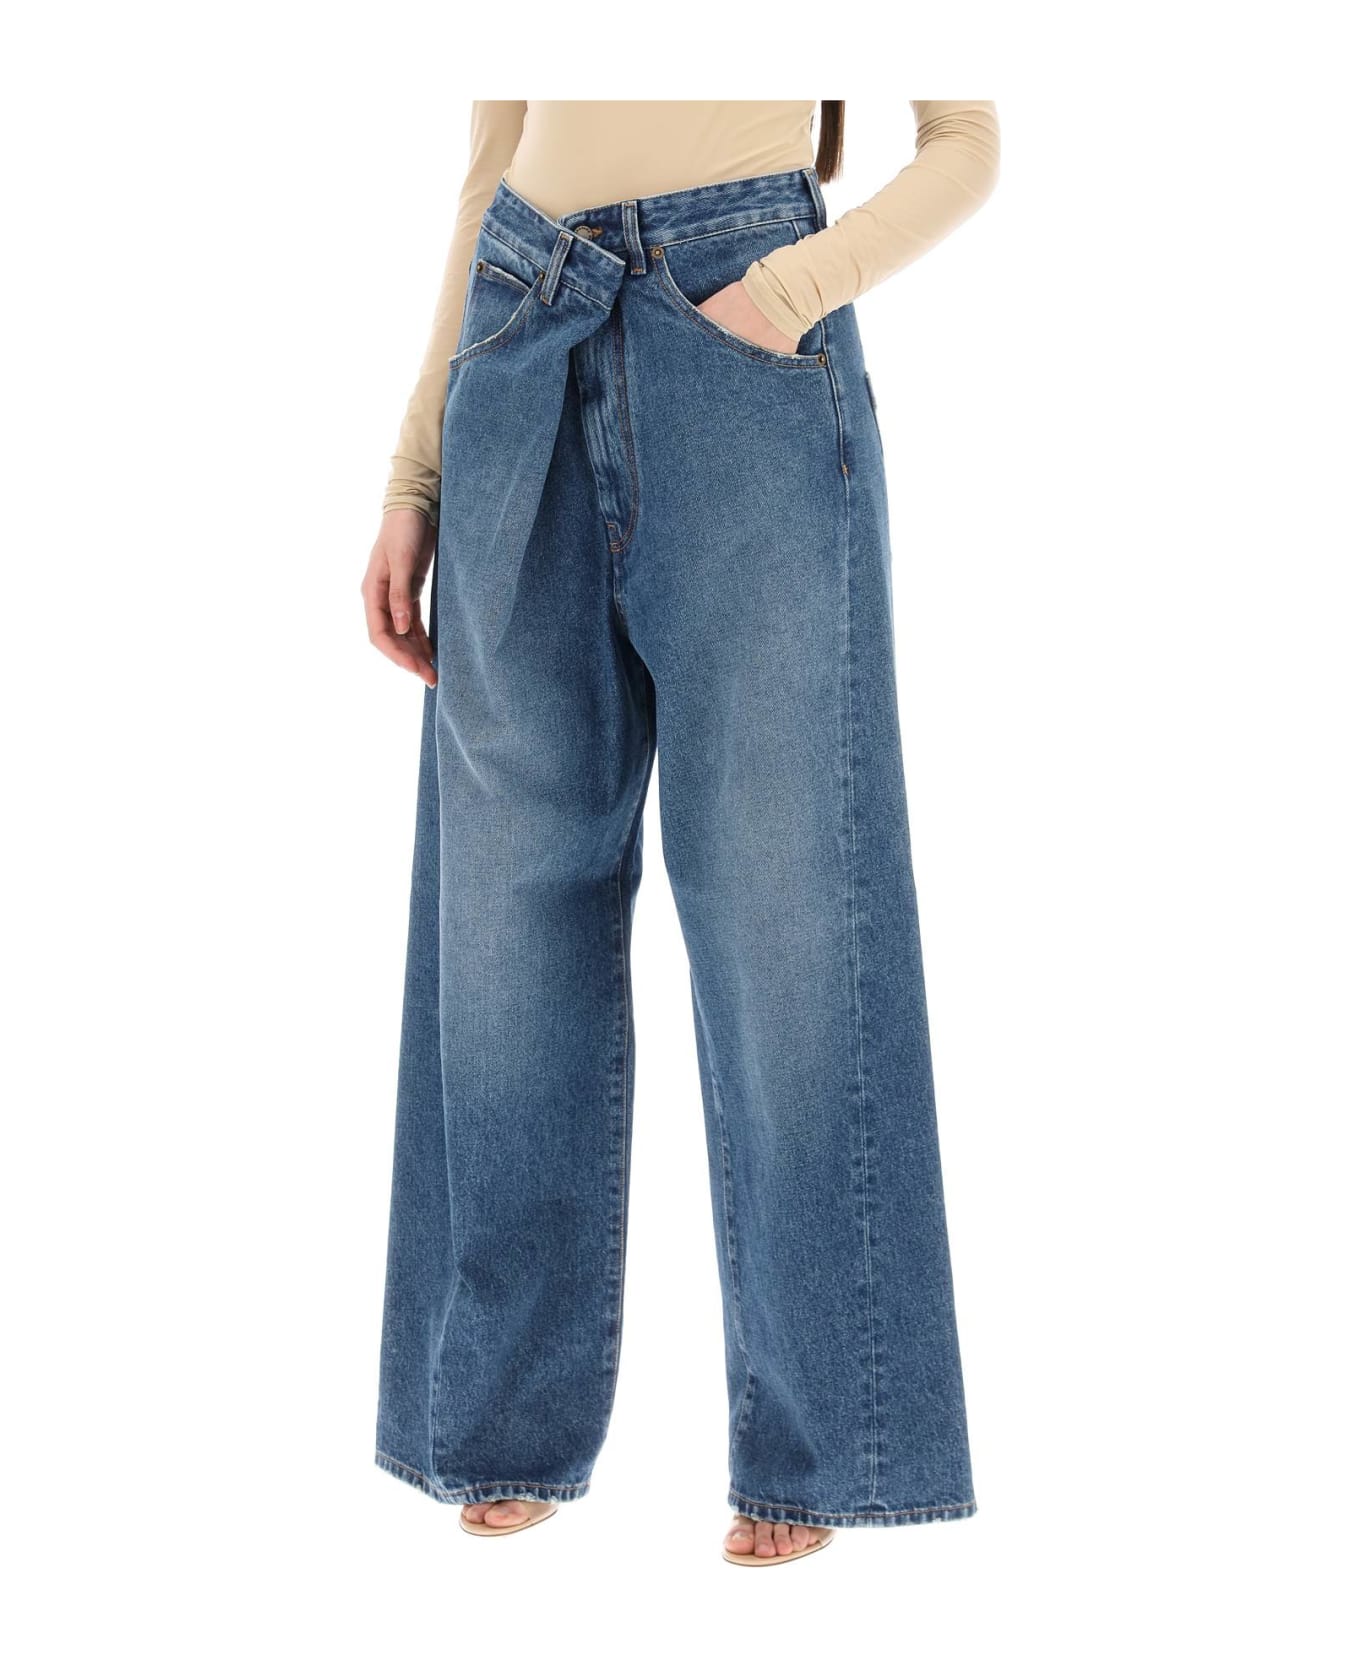 DARKPARK 'ines' Baggy Jeans With Folded Waistband - MEDIUM WASH (Light blue)